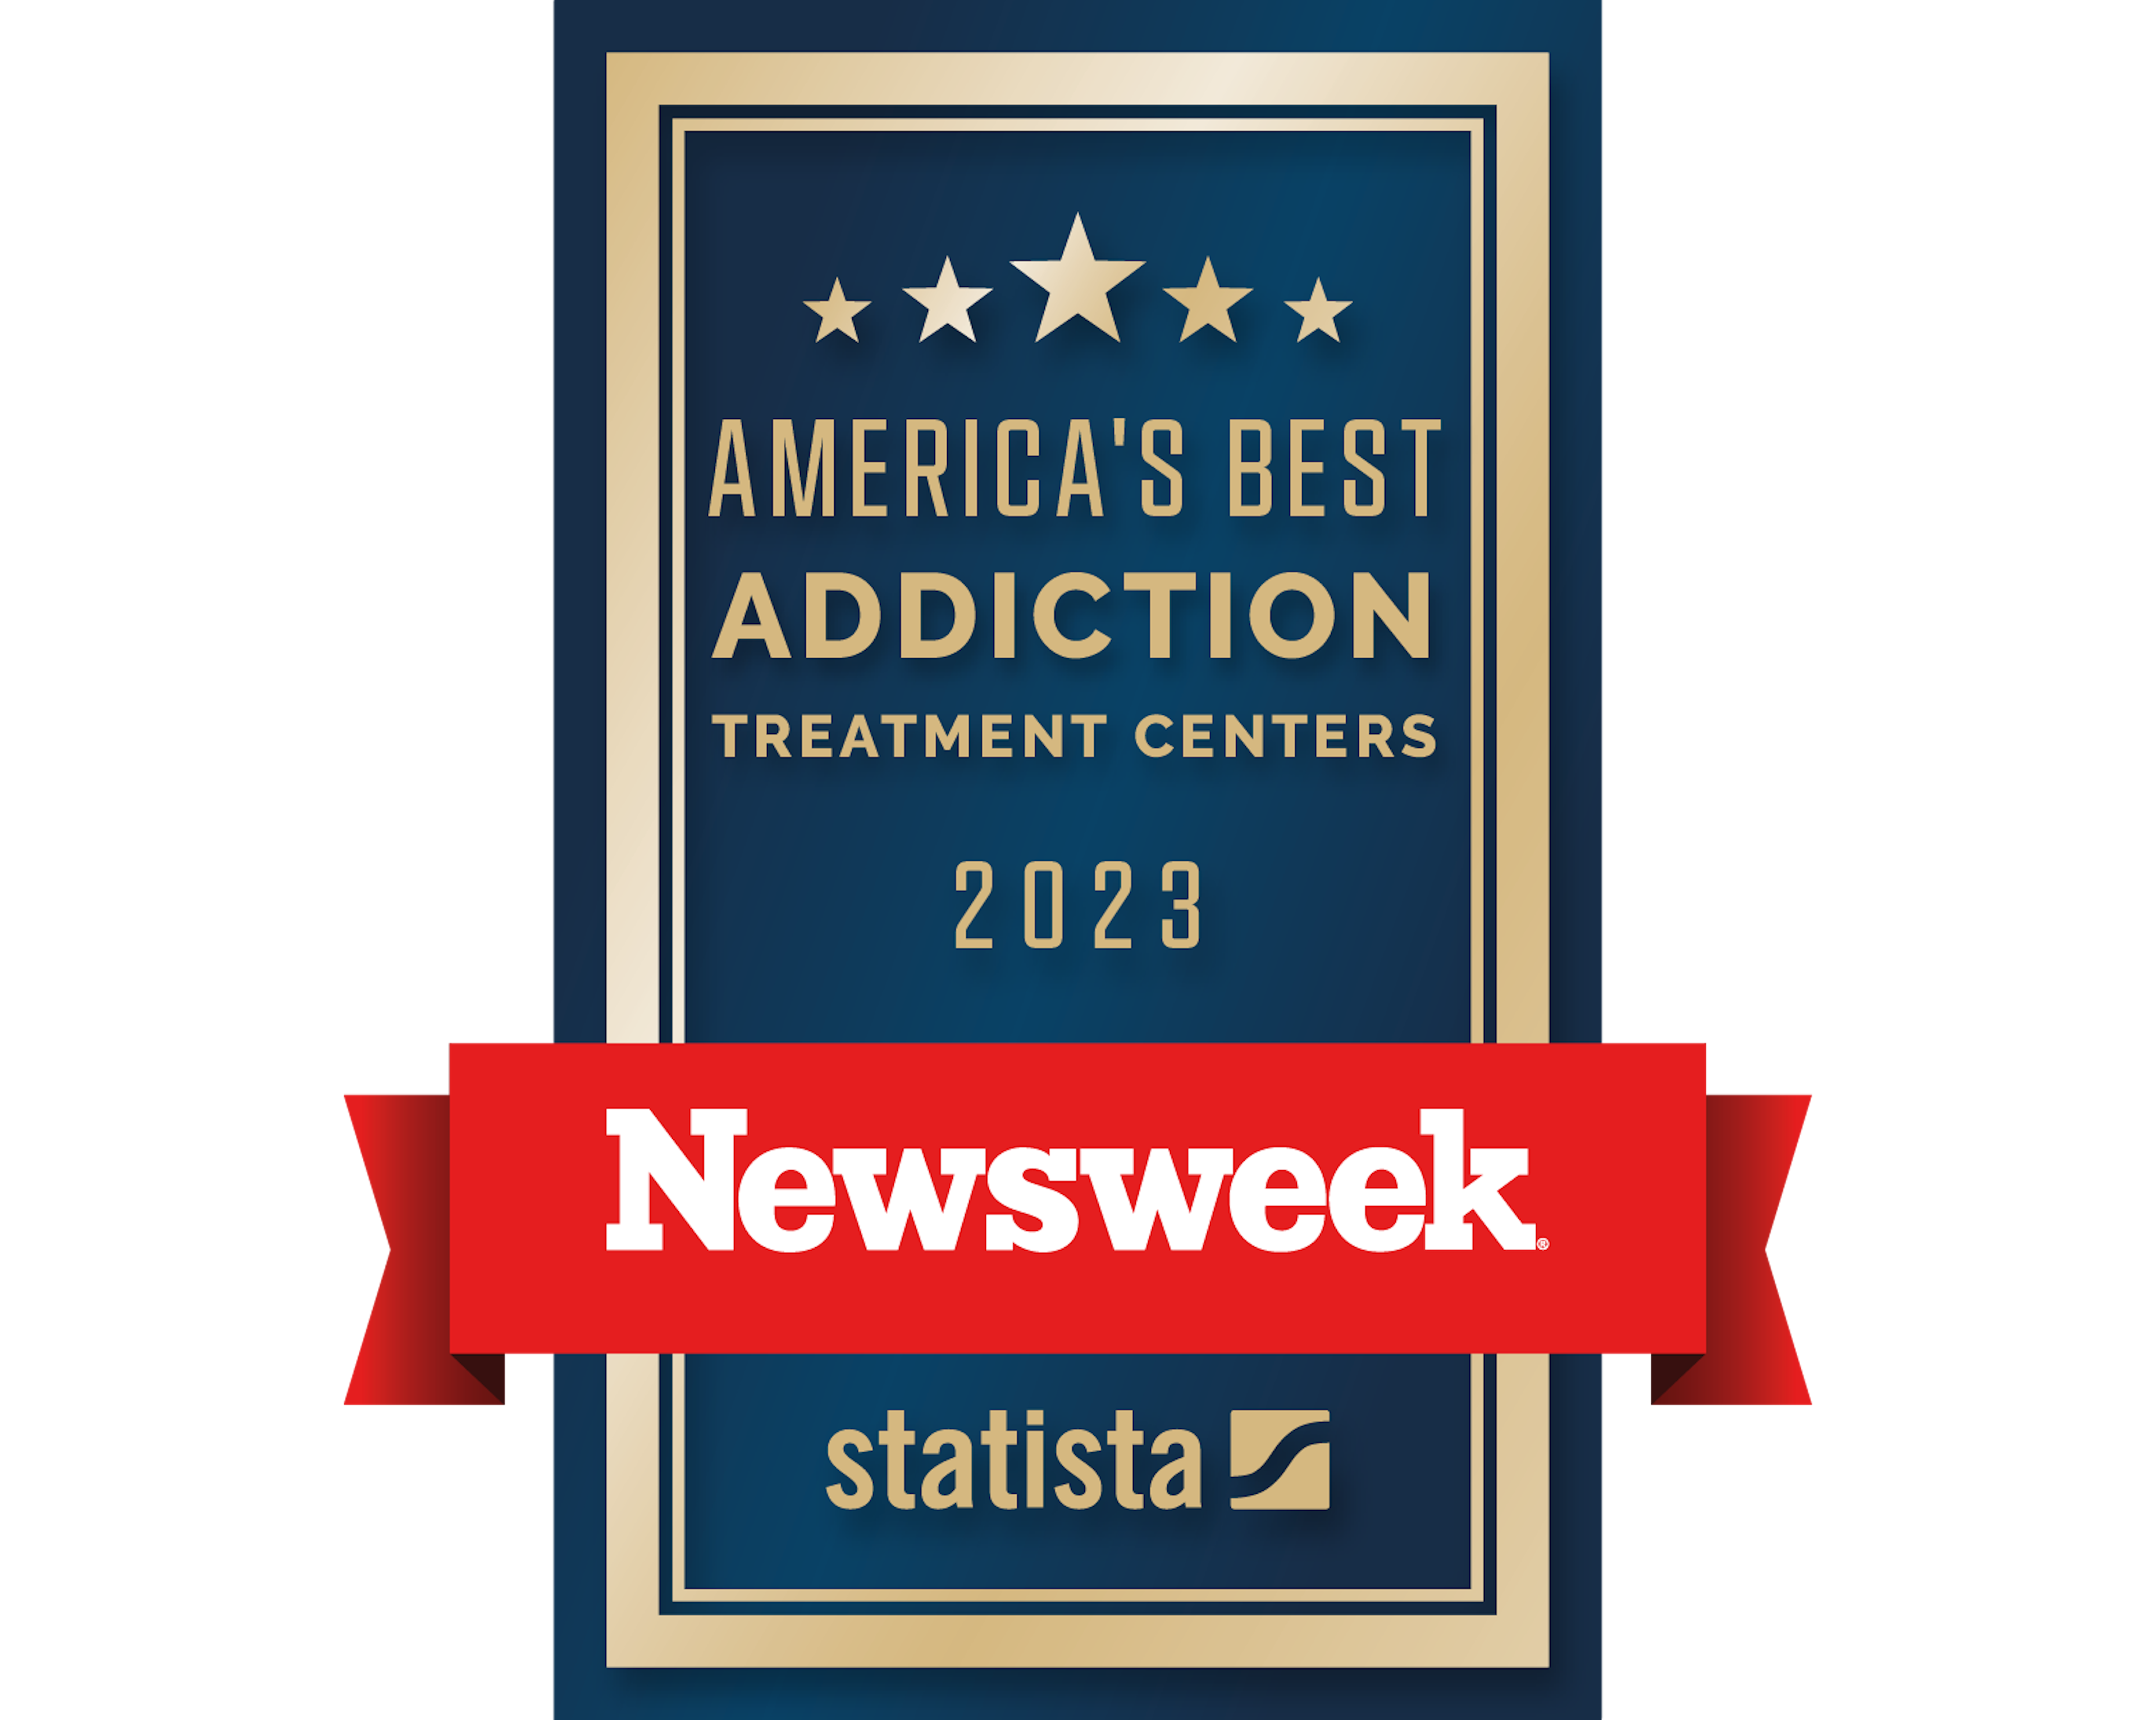 Newsweek Best Addition Treatment Center 2023